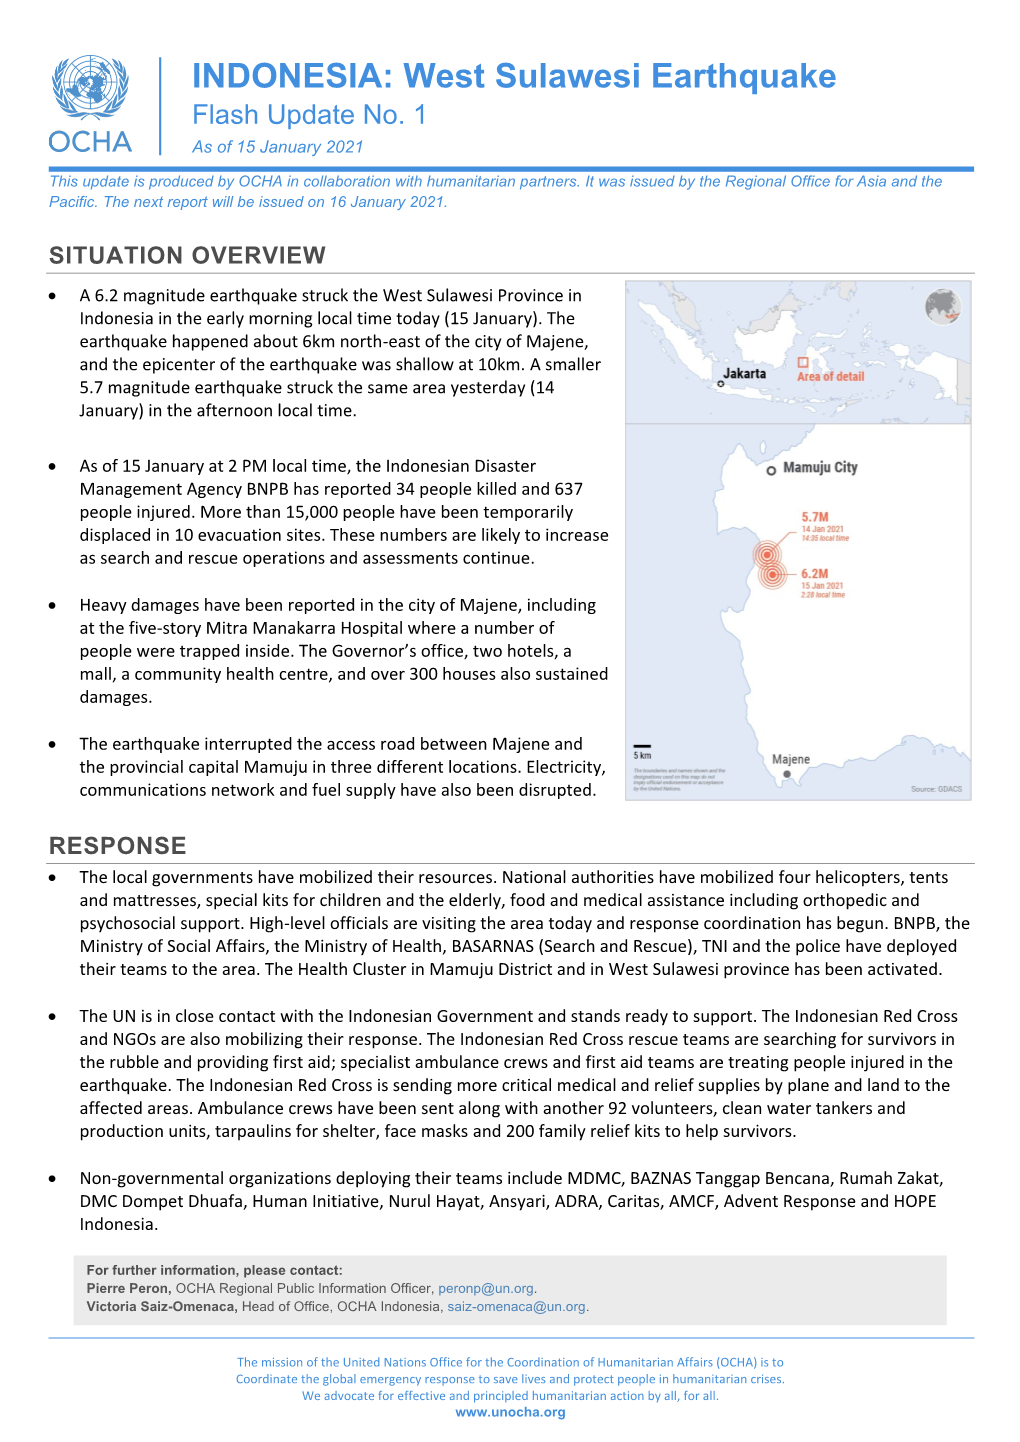 INDONESIA: West Sulawesi Earthquake Flash Update No